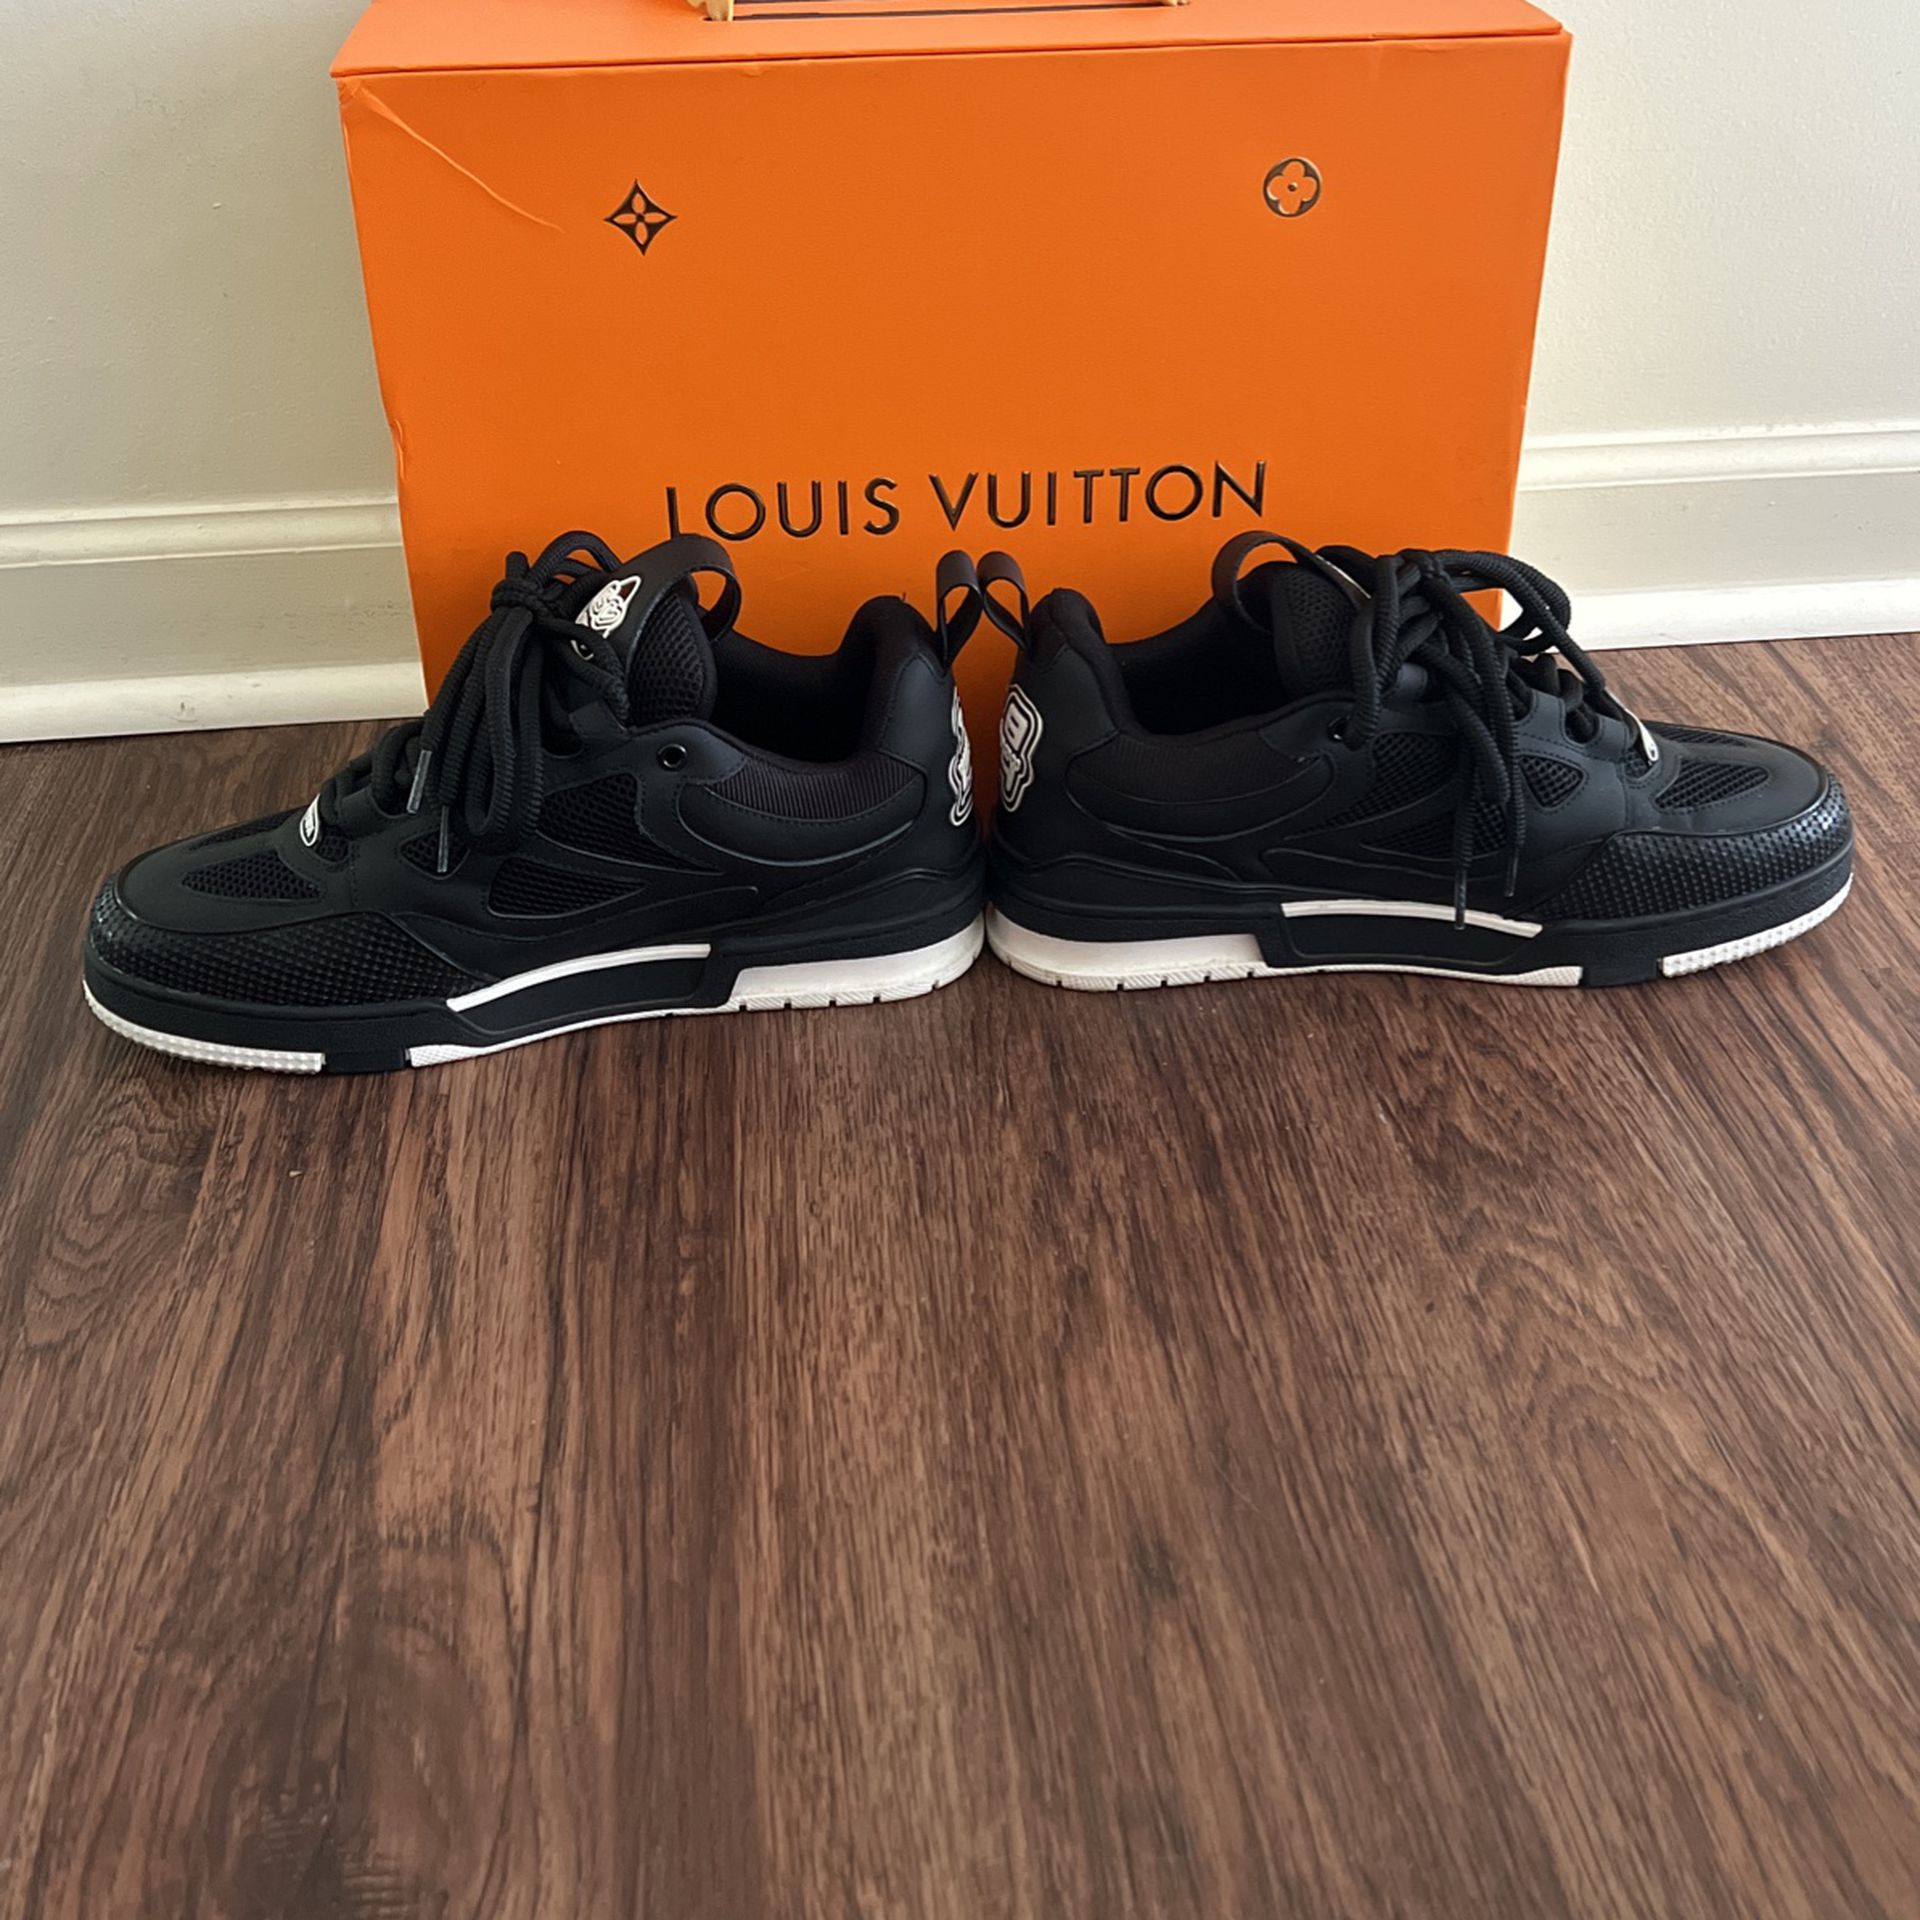 Louis Vuitton LV Skate Sneaker for Sale in Matthews, NC - OfferUp